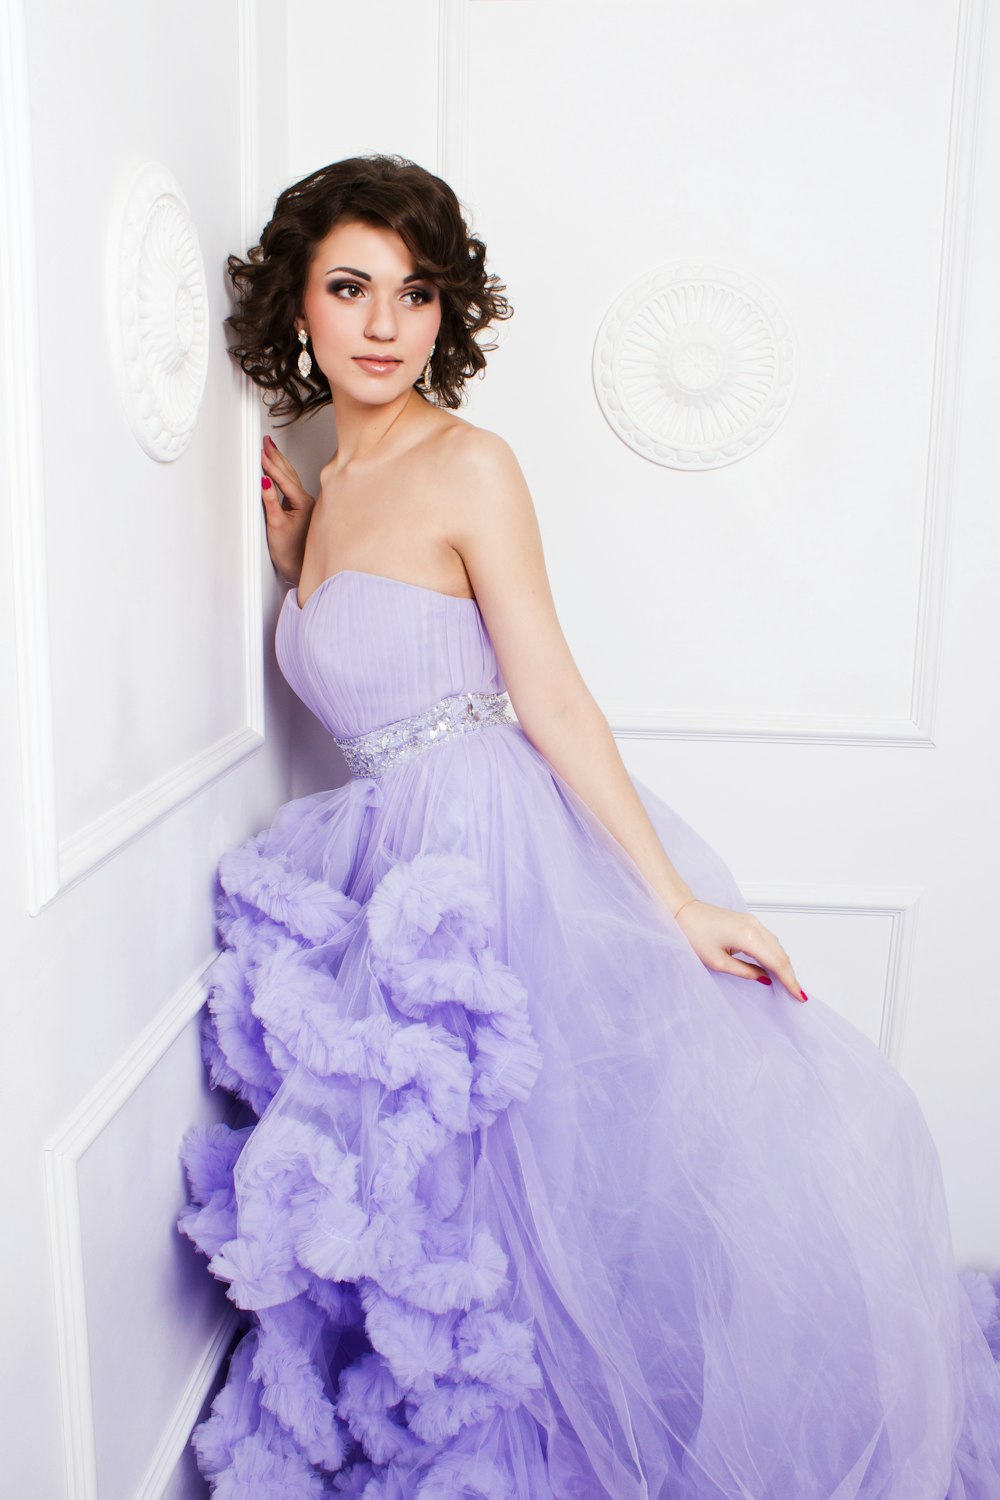 woman in purple strapless wedding dress leaning on wall